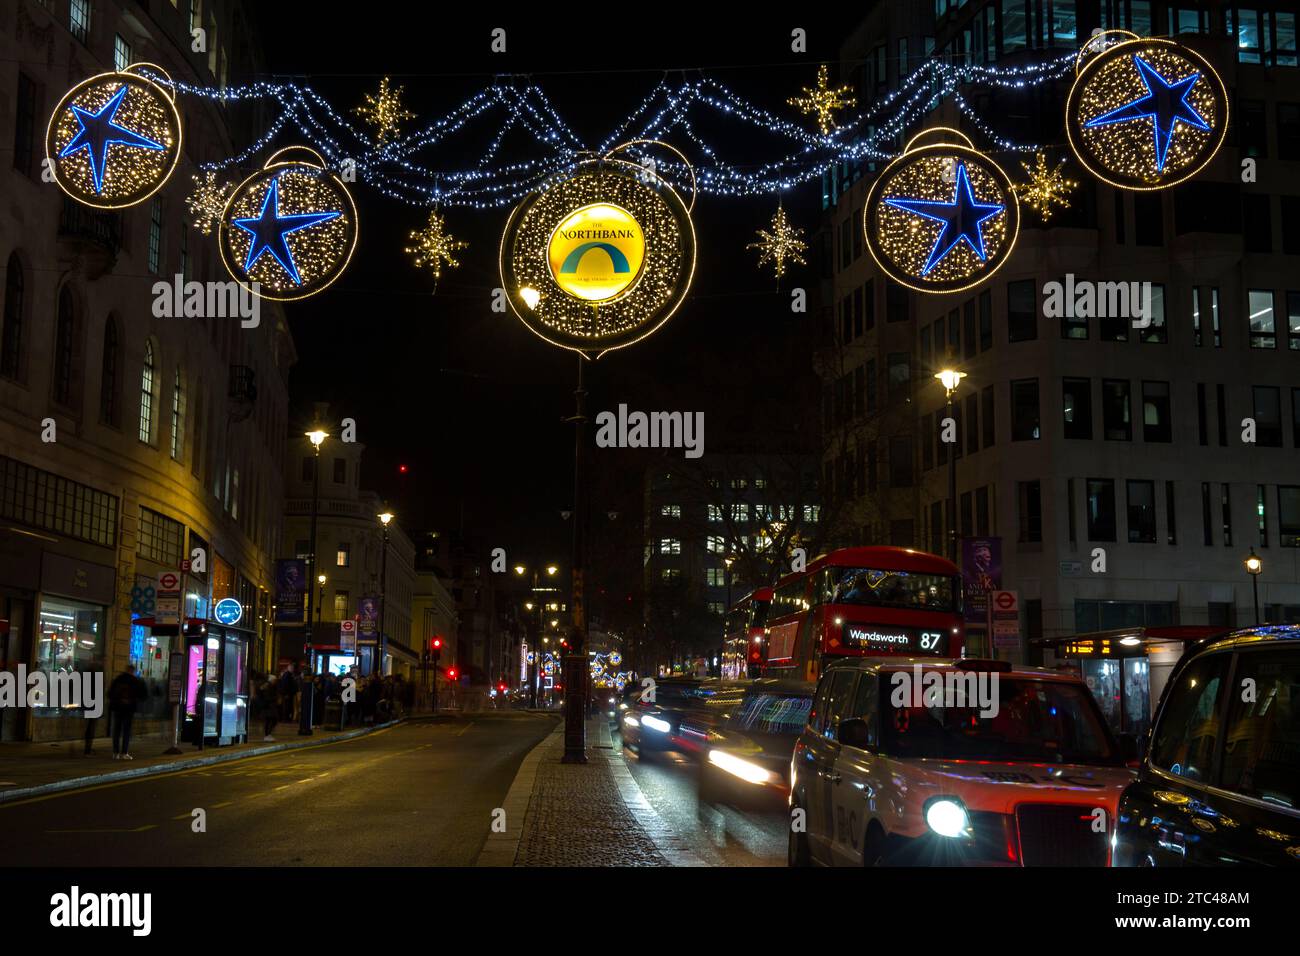 Festive Christmas Lights The Strand Northbank London Stock Photo